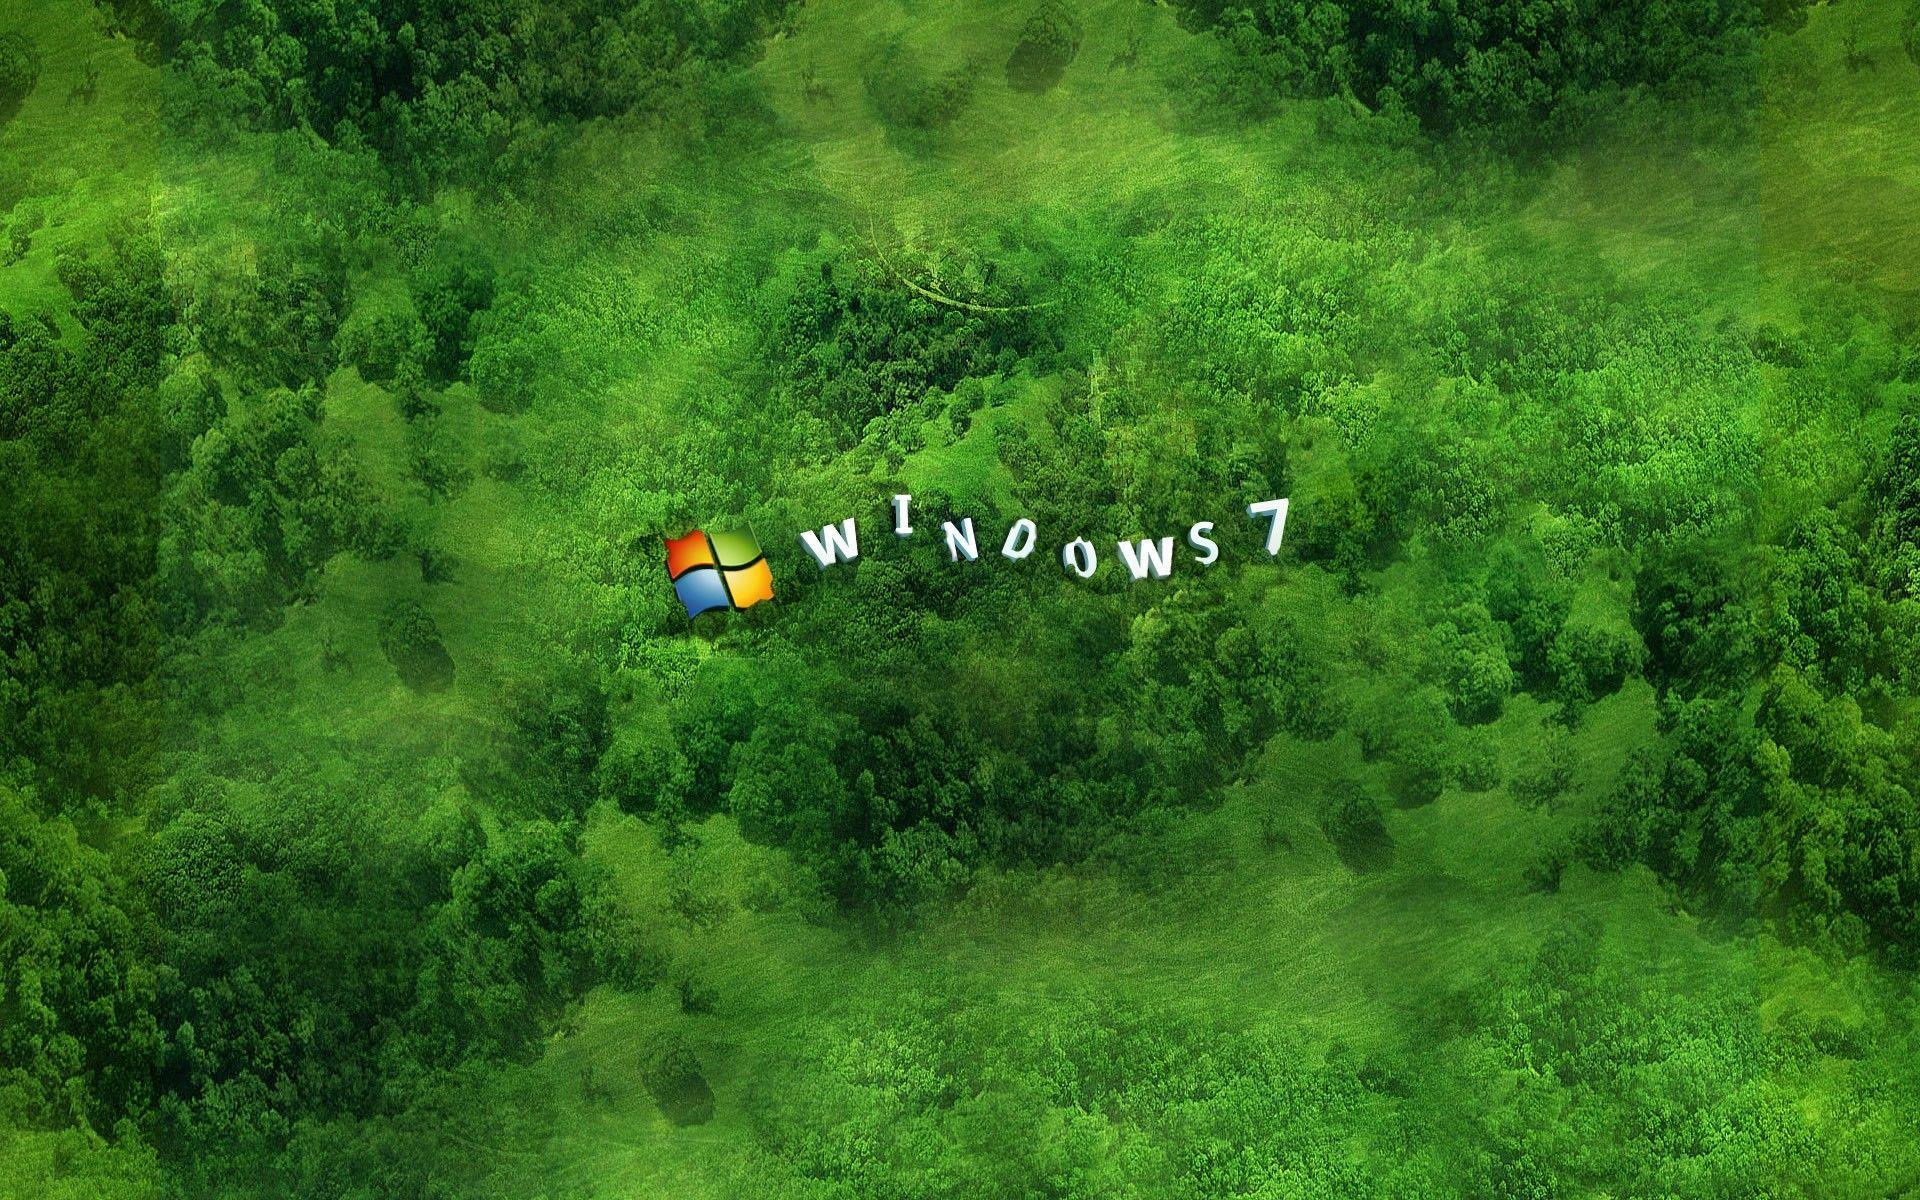 Windows Xp wallpaper